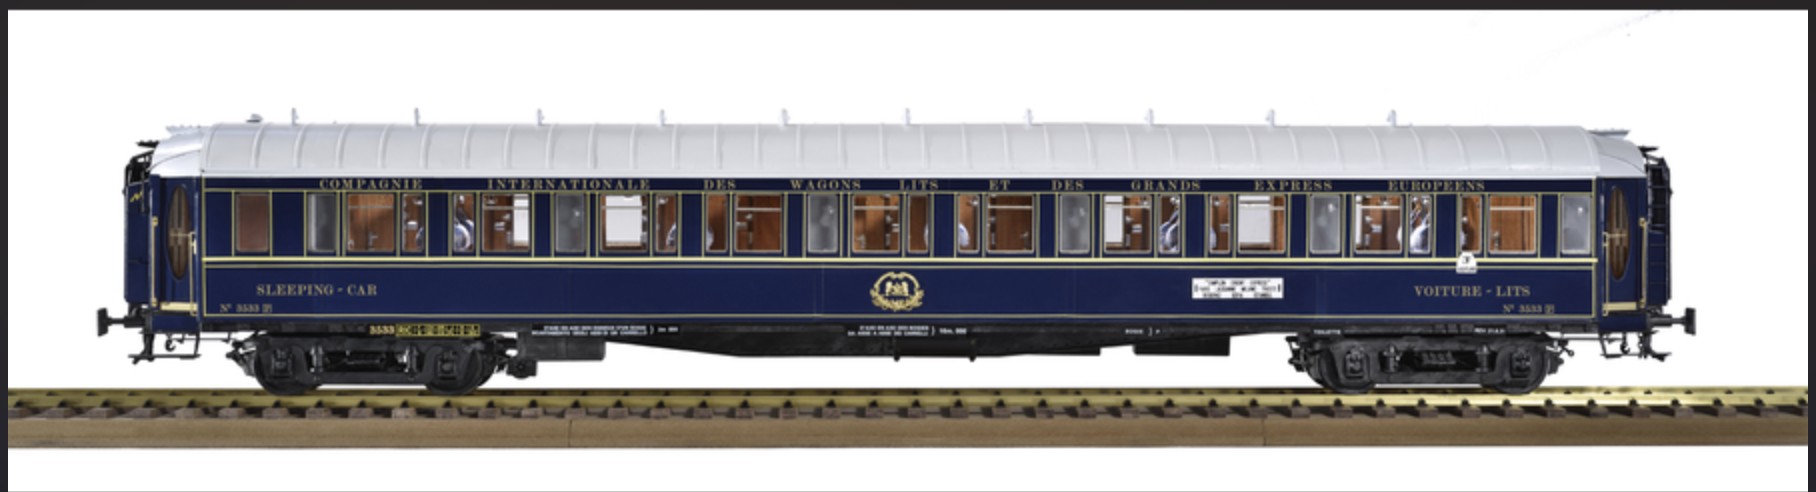 1/32 1929 Orient Express Sleeping Car No.3533 LX - Amati - Non